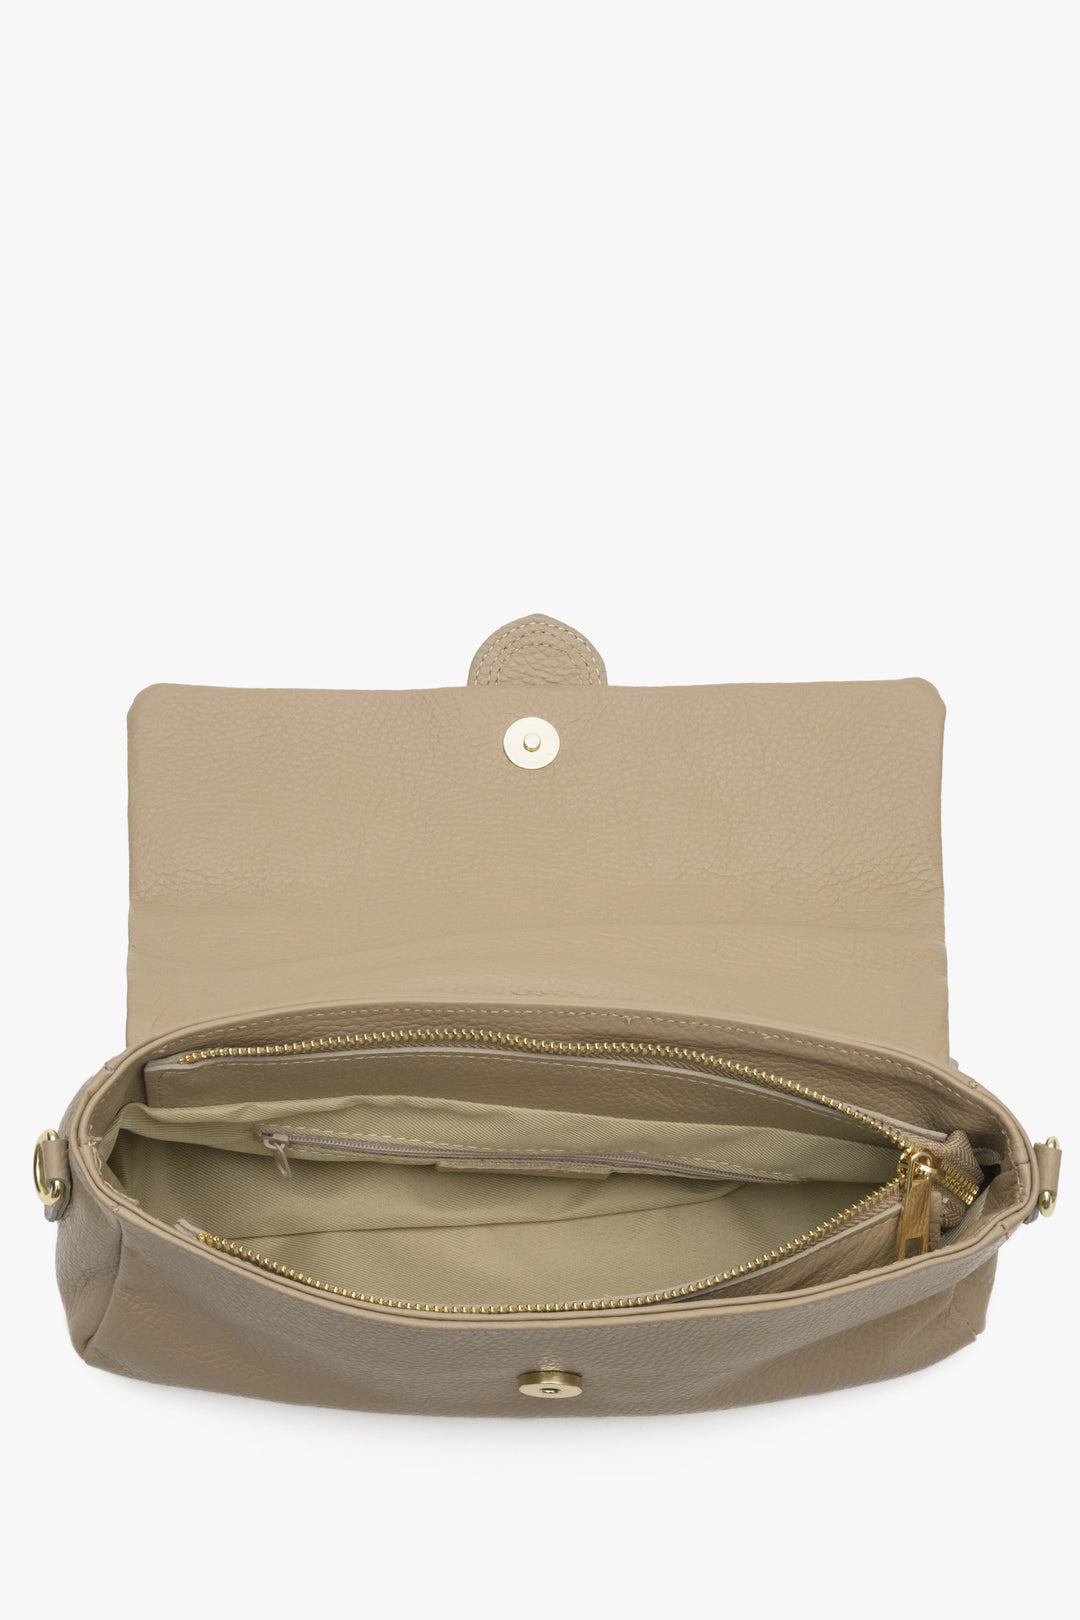 Elegant women's handbag in beige Estro - presentation of the bag's main pocket.